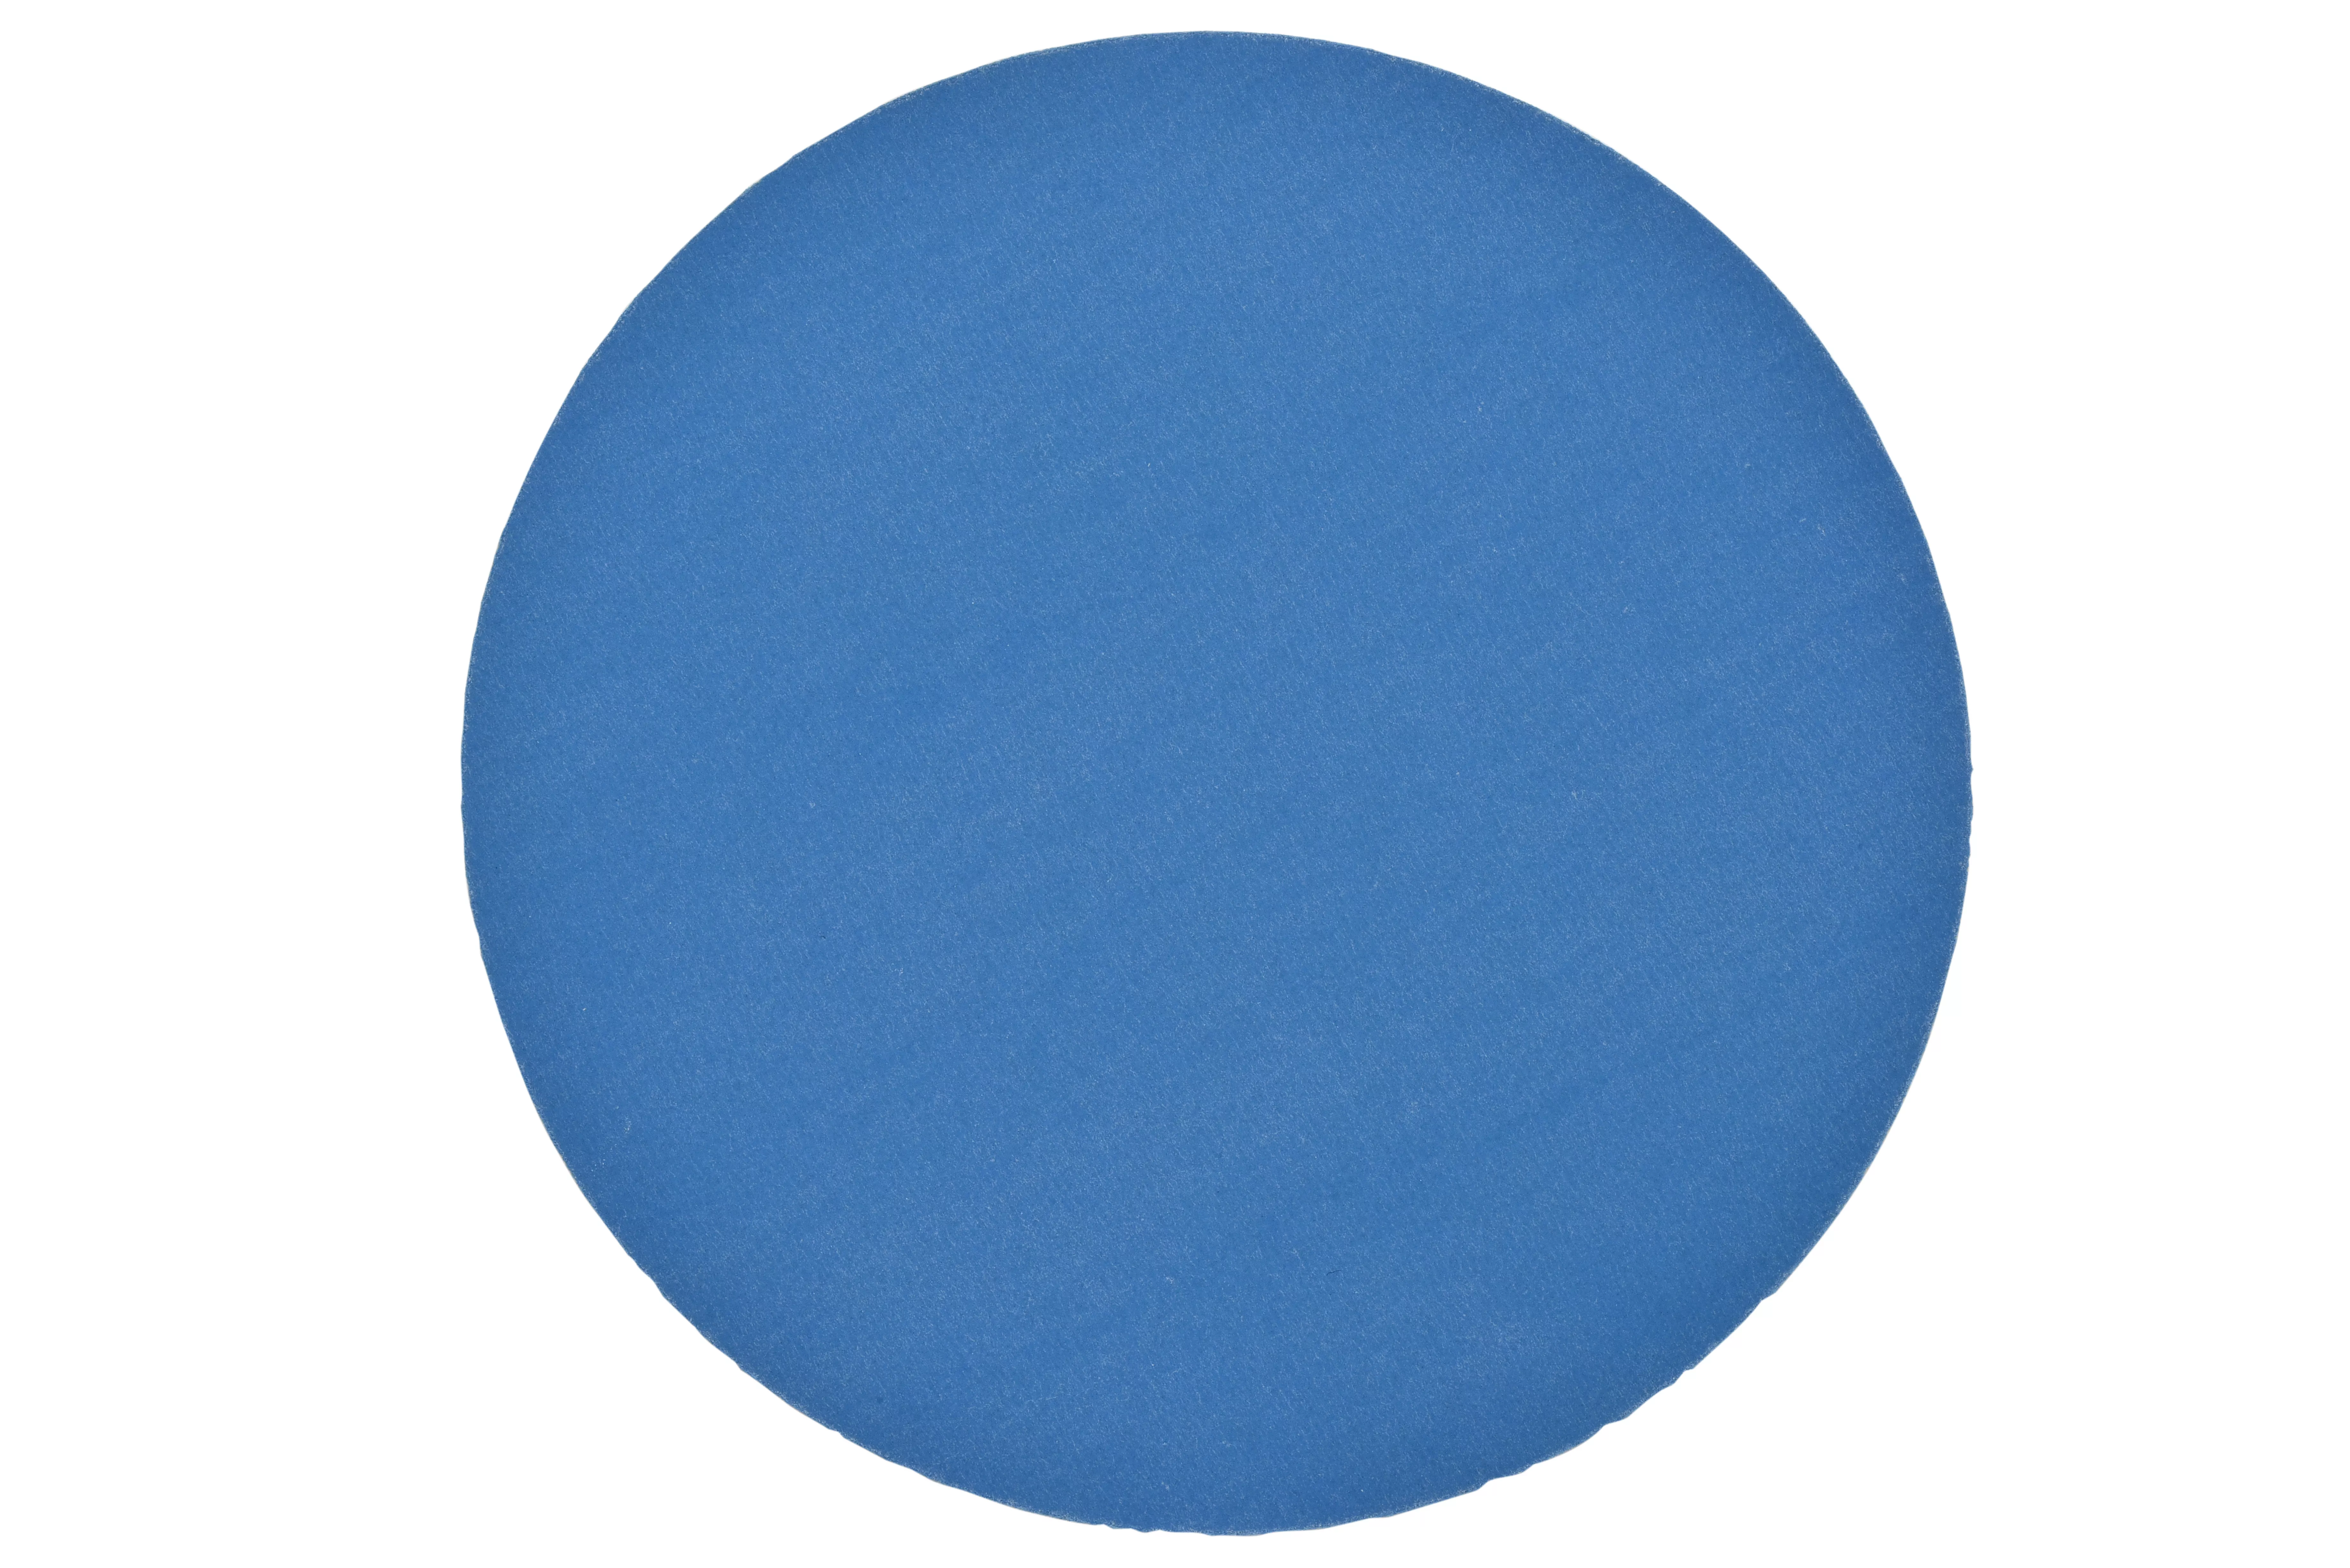 3M™ Stikit™ Blue Abrasive Disc Roll, 36273, 5 in, 500 grade, No Hole, 100 discs per roll, 5 rolls per case